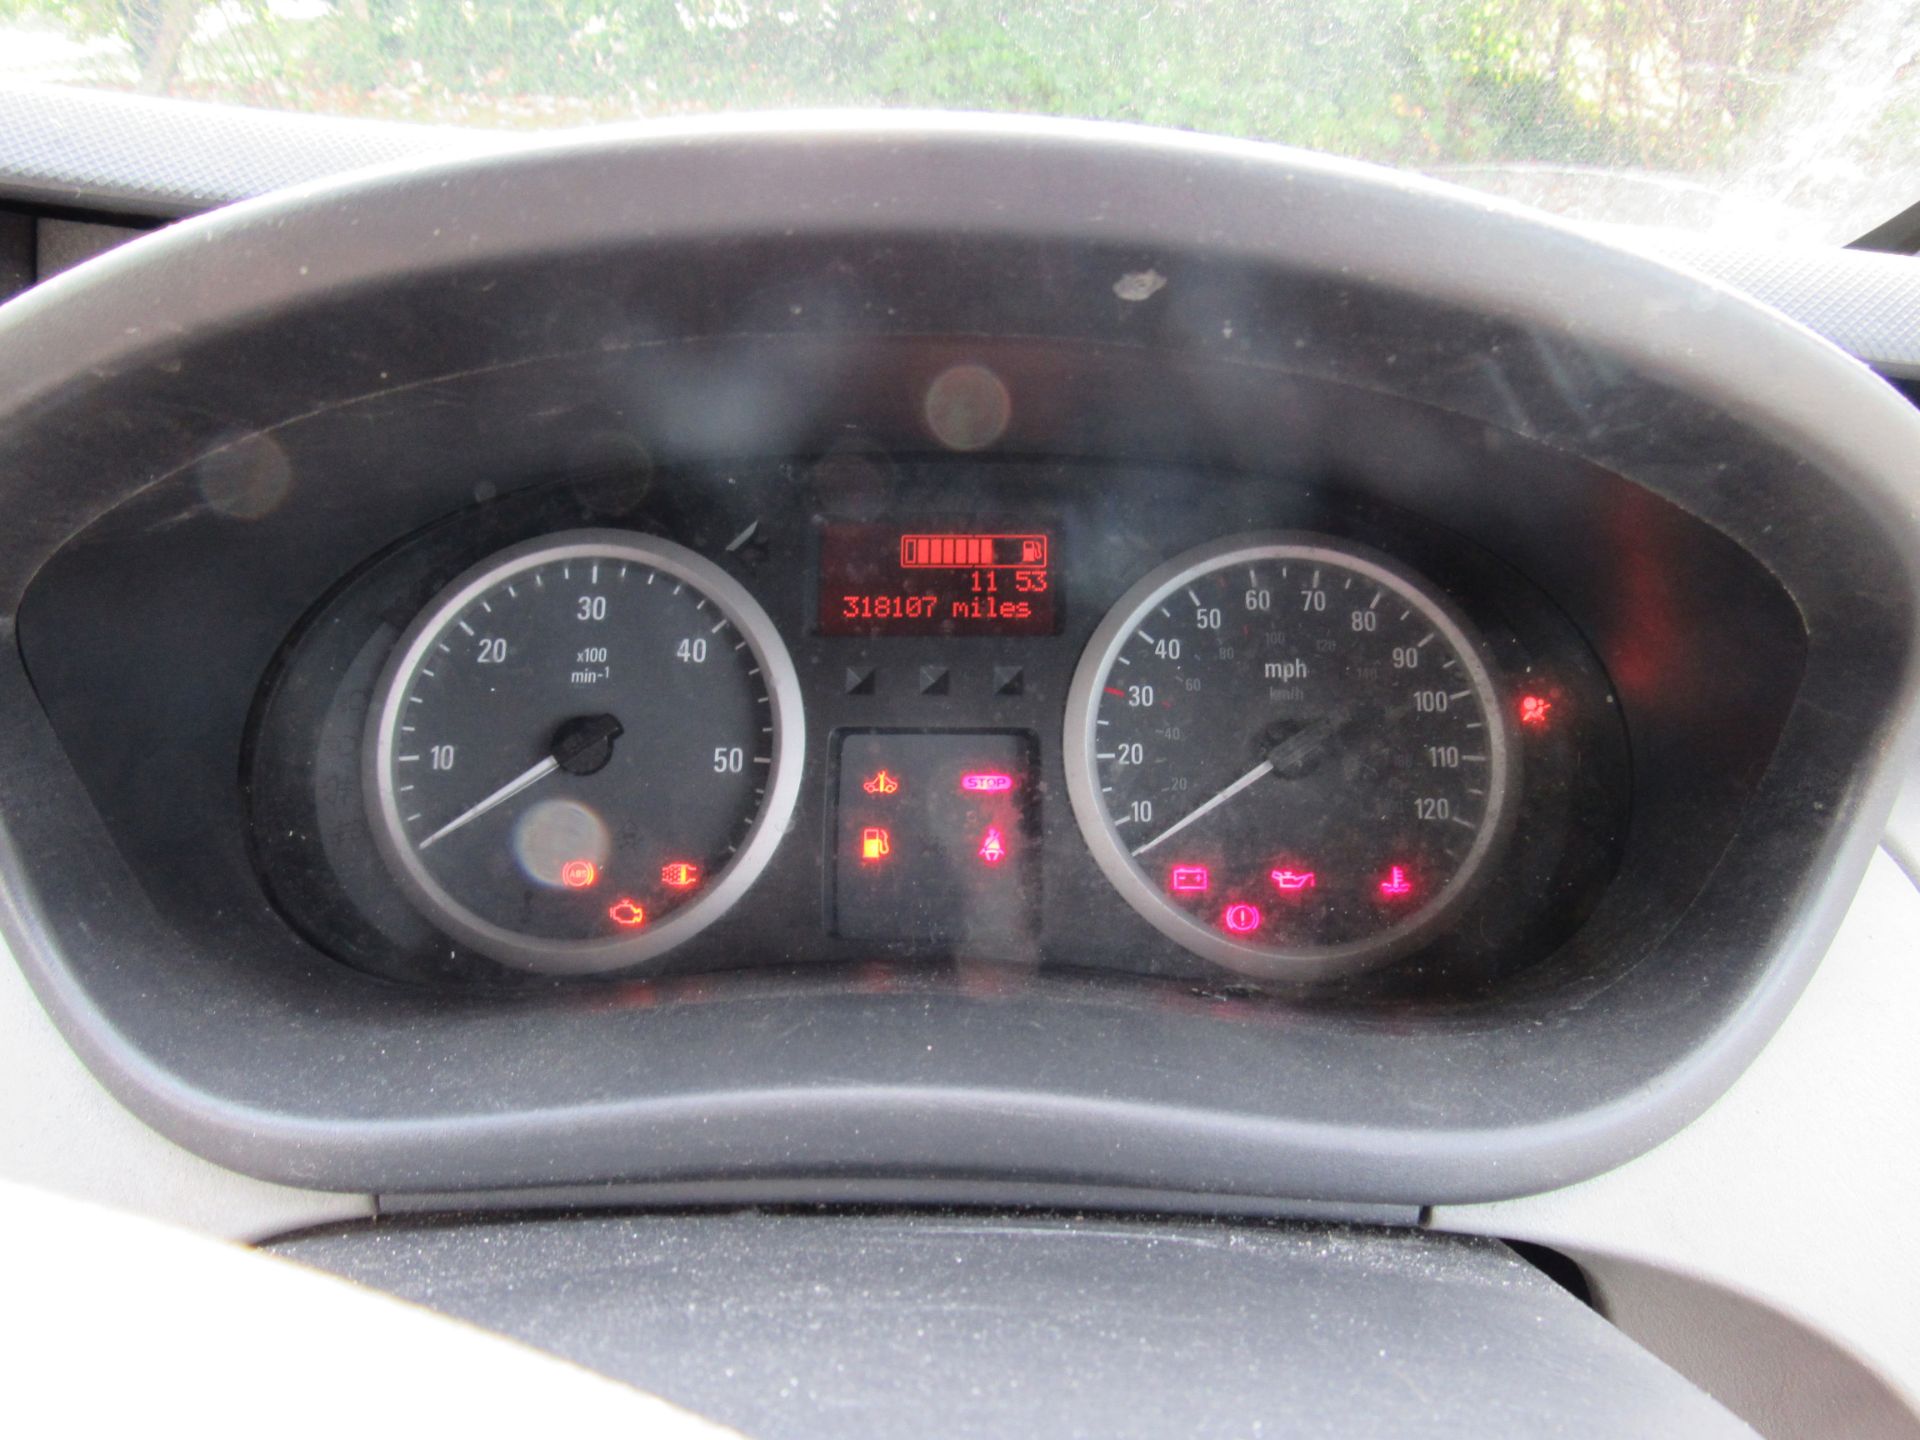 Vauxhall Vivaro CDTI, Registration YF63 WTY, 318,107 miles, Diesel, First Registered December - Image 11 of 11